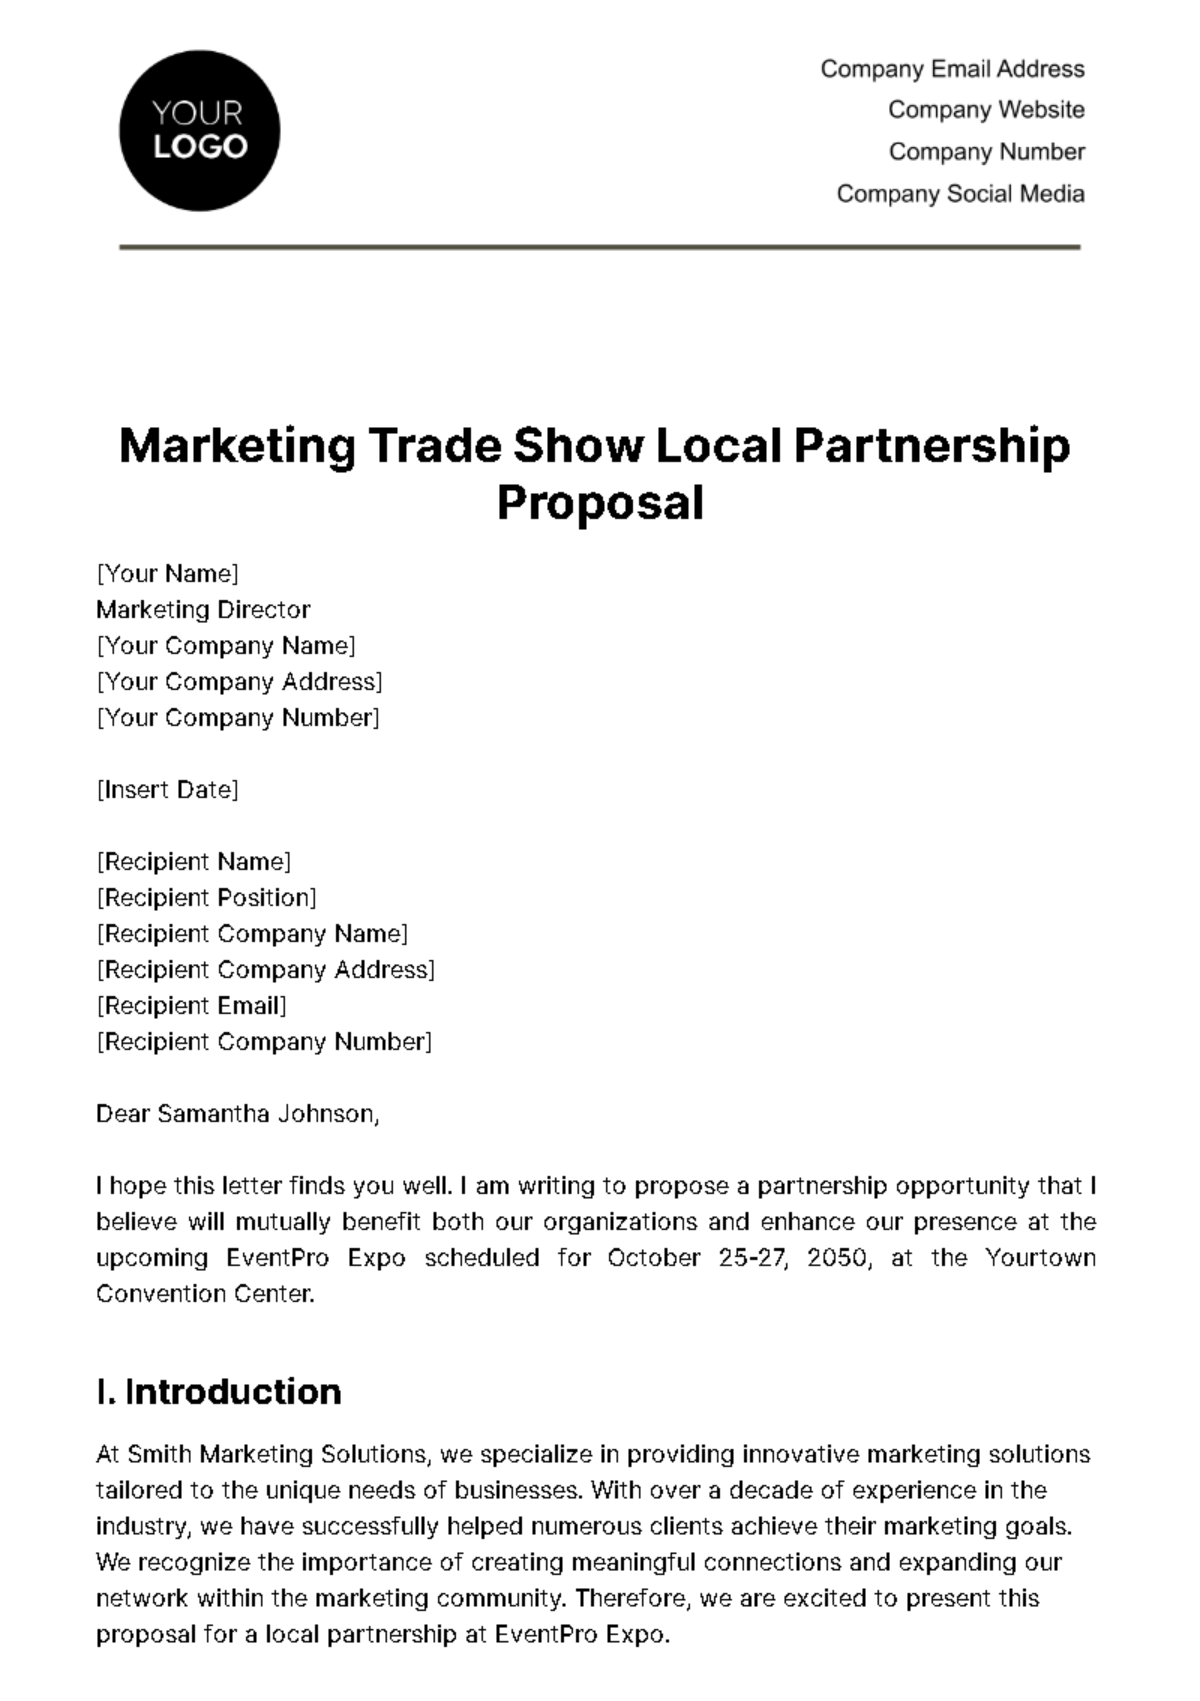 Marketing Trade Show Local Partnership Proposal Template